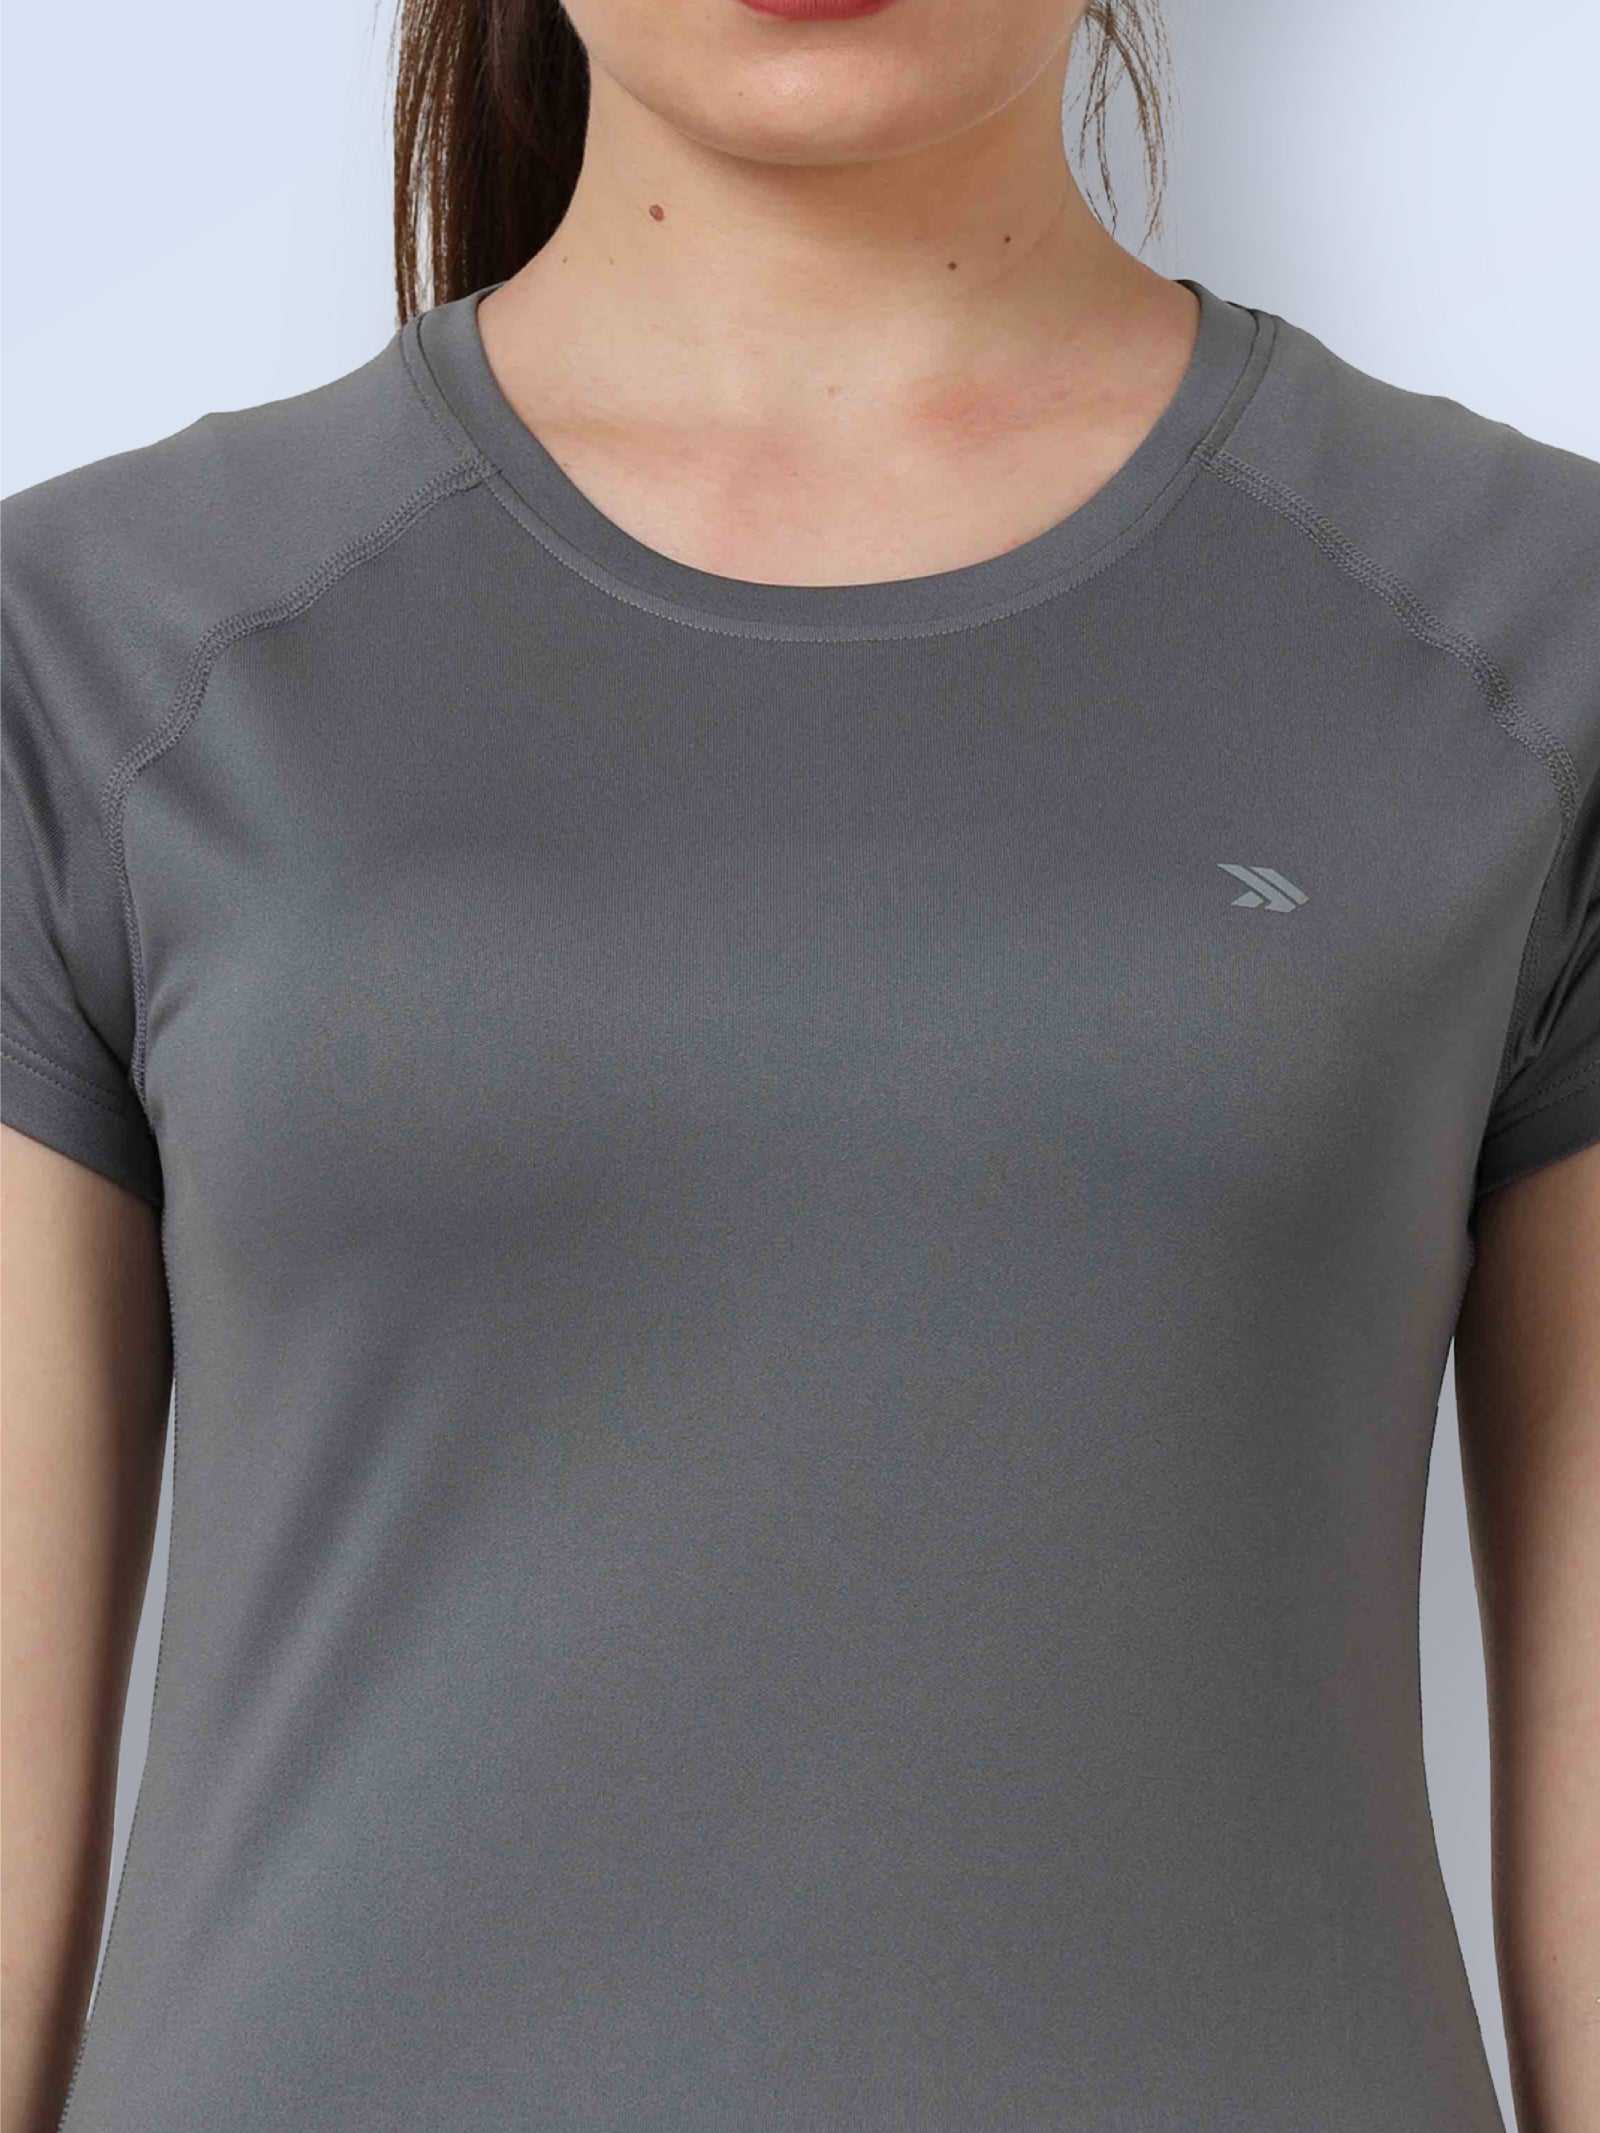 JOLGER Women's Polyester Dark Grey colour Crew Neck T-Shirt -Solid